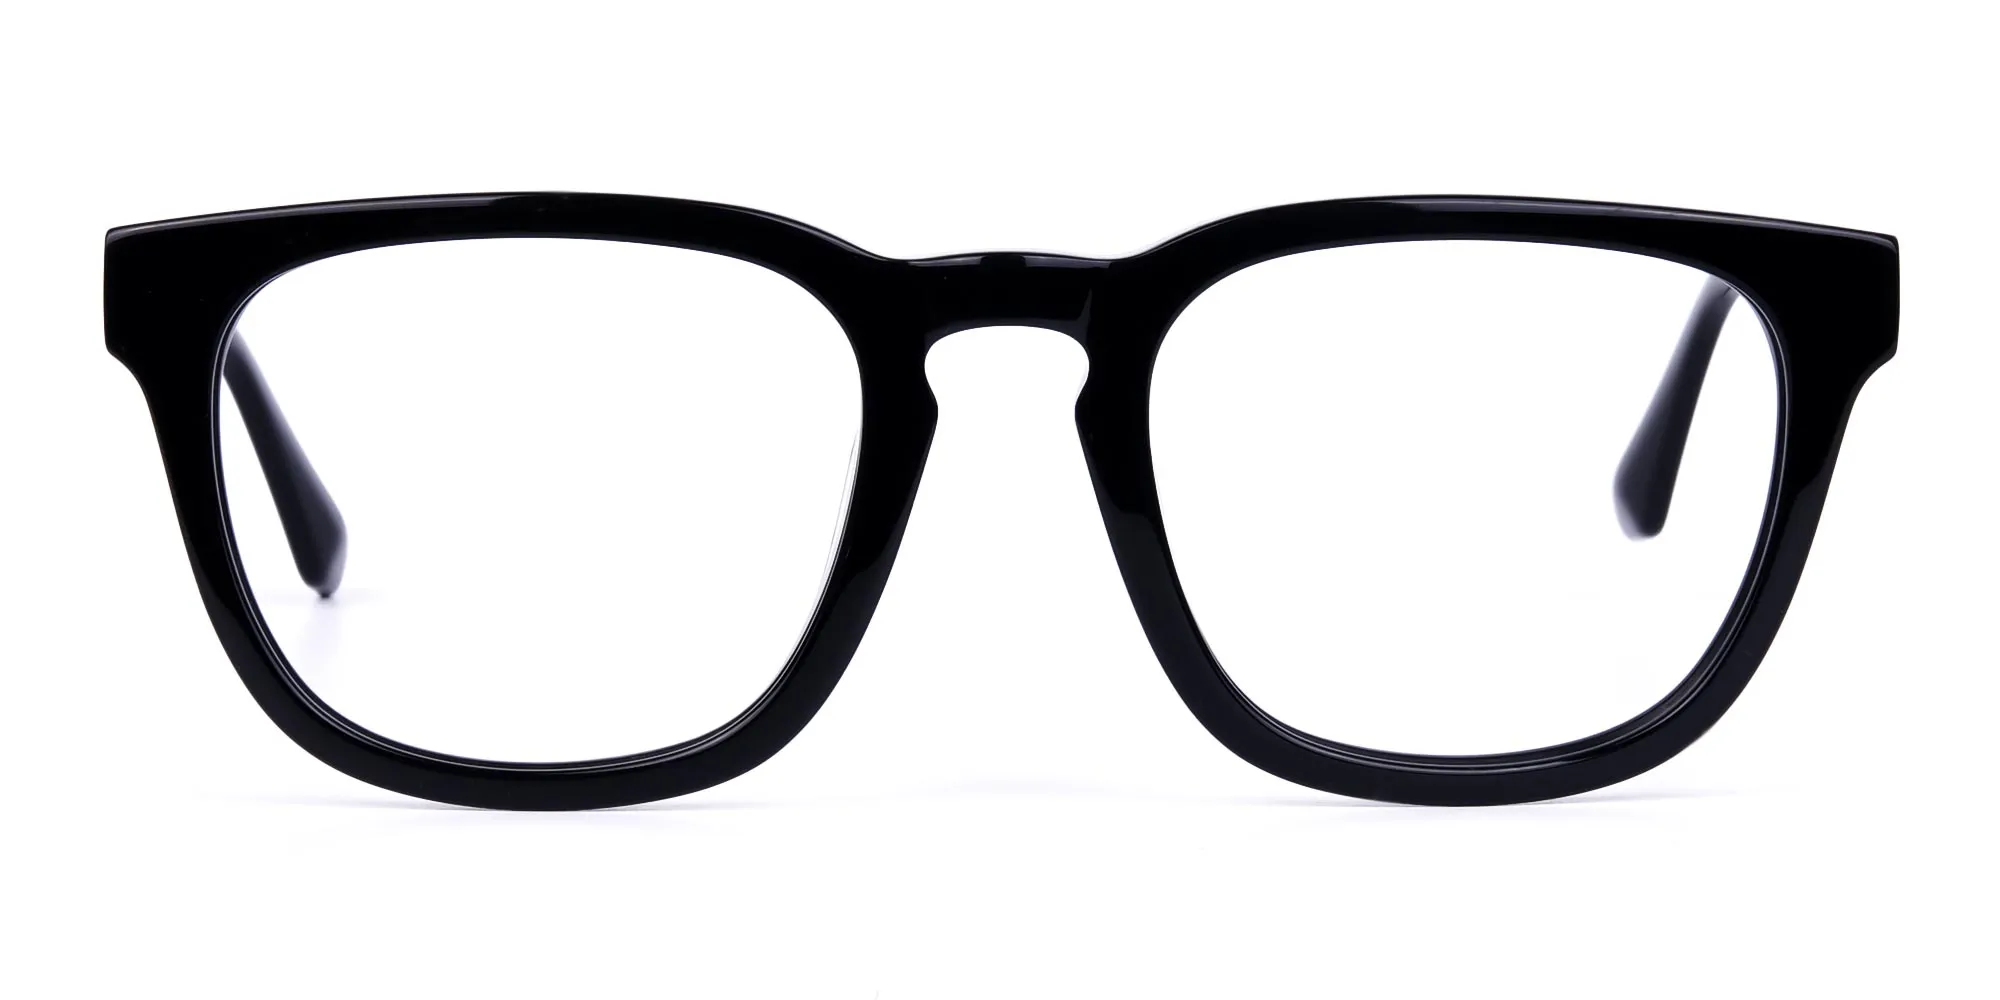 Chunky black glasses